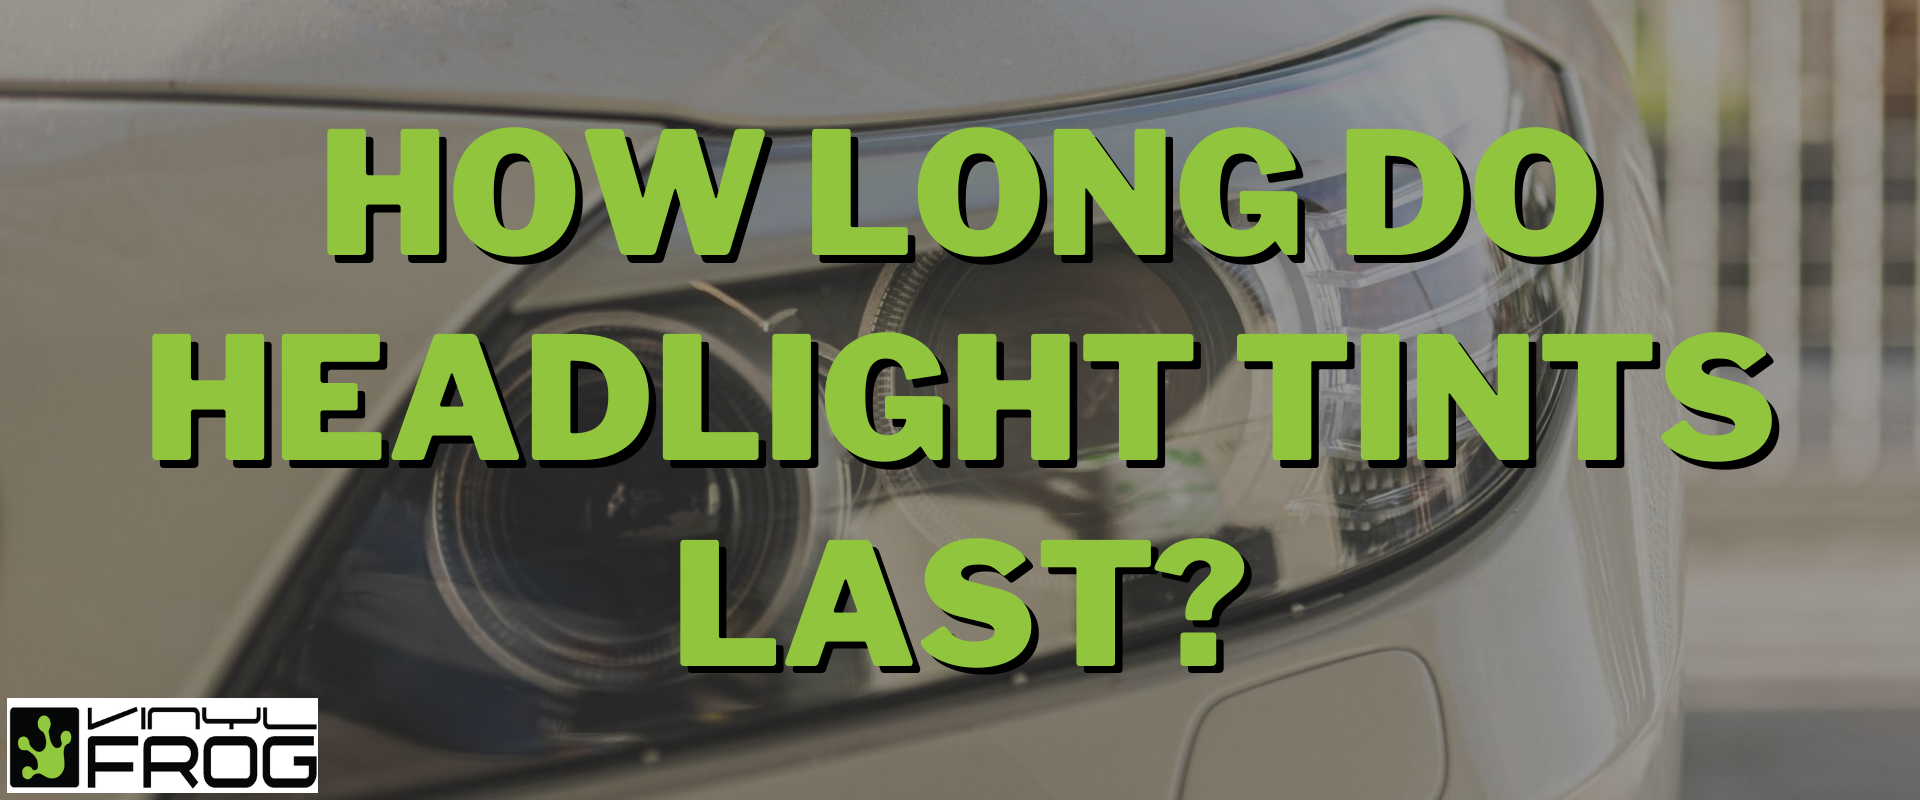 How Long Do Headlight Tints Last?